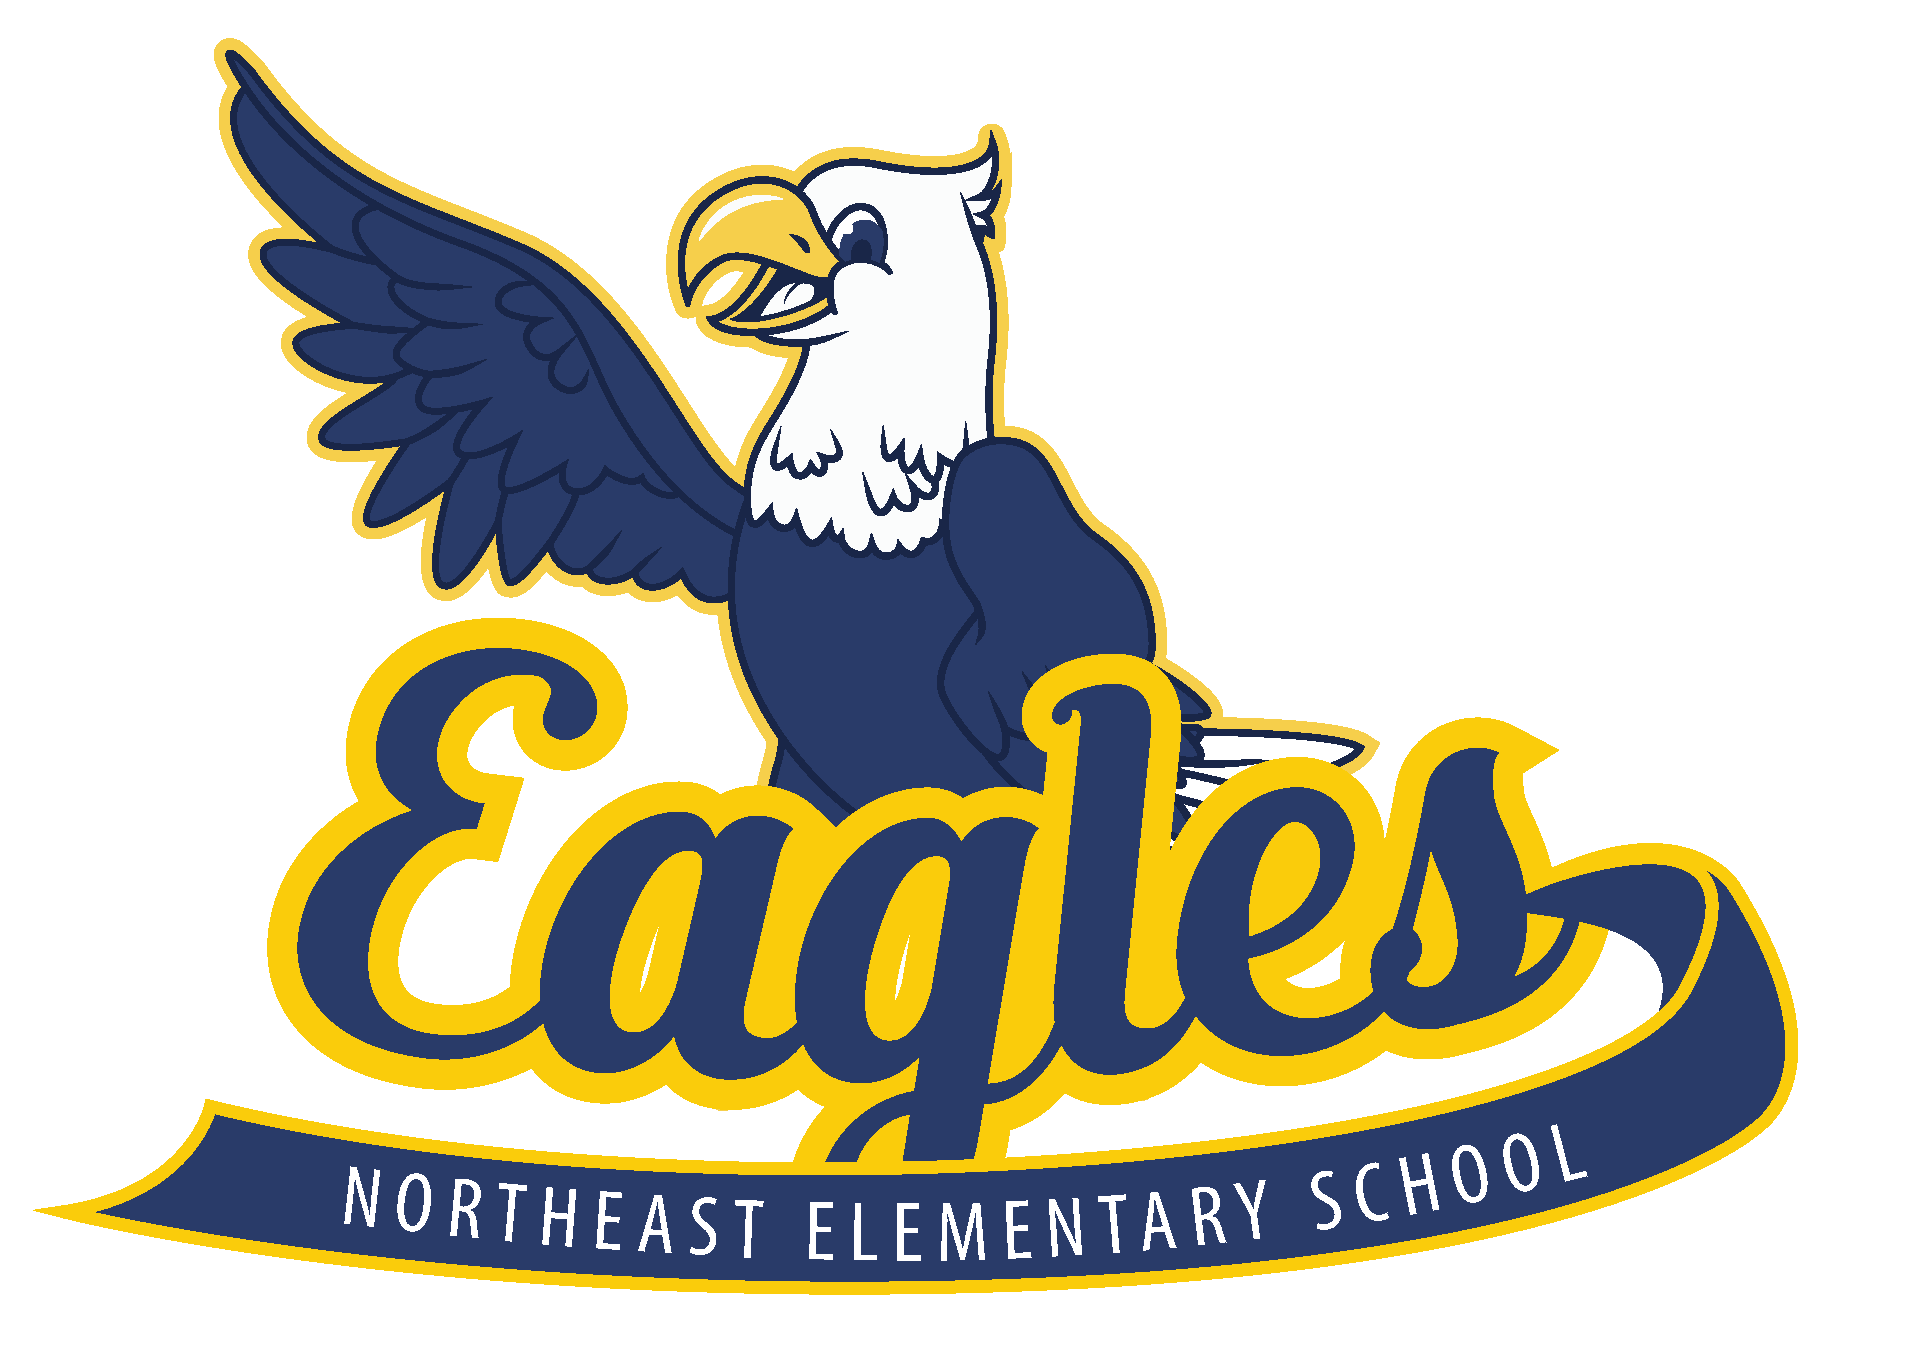 northeast elementary school logo